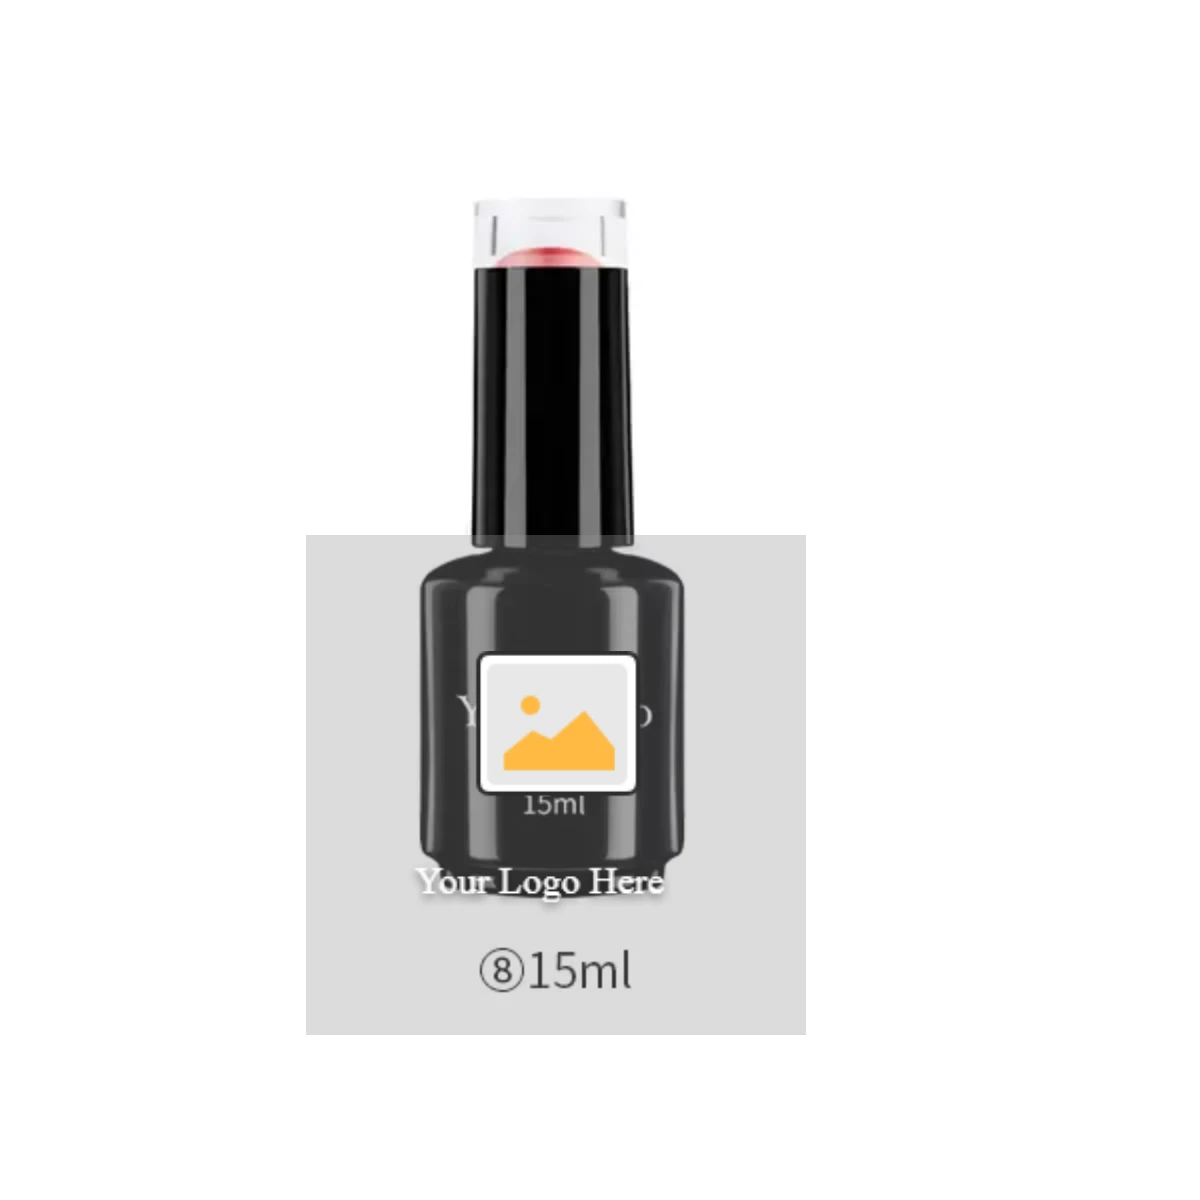 Free sample RS Nail 15ml uv led soak off wipe top coat  nail polish